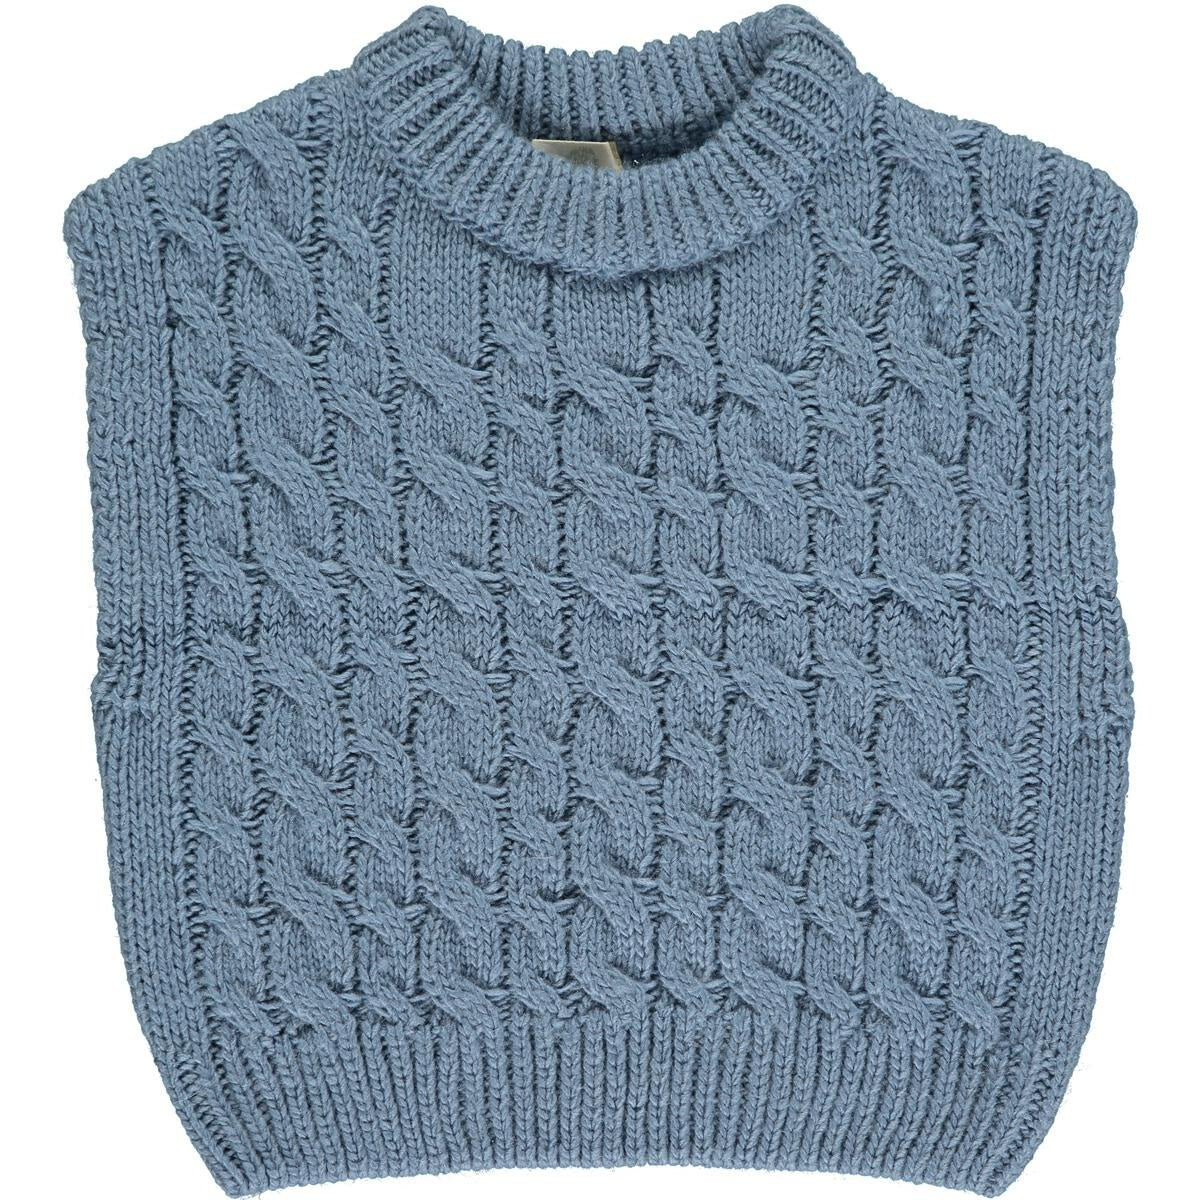 Vignette Ruth Blue Sweater Top